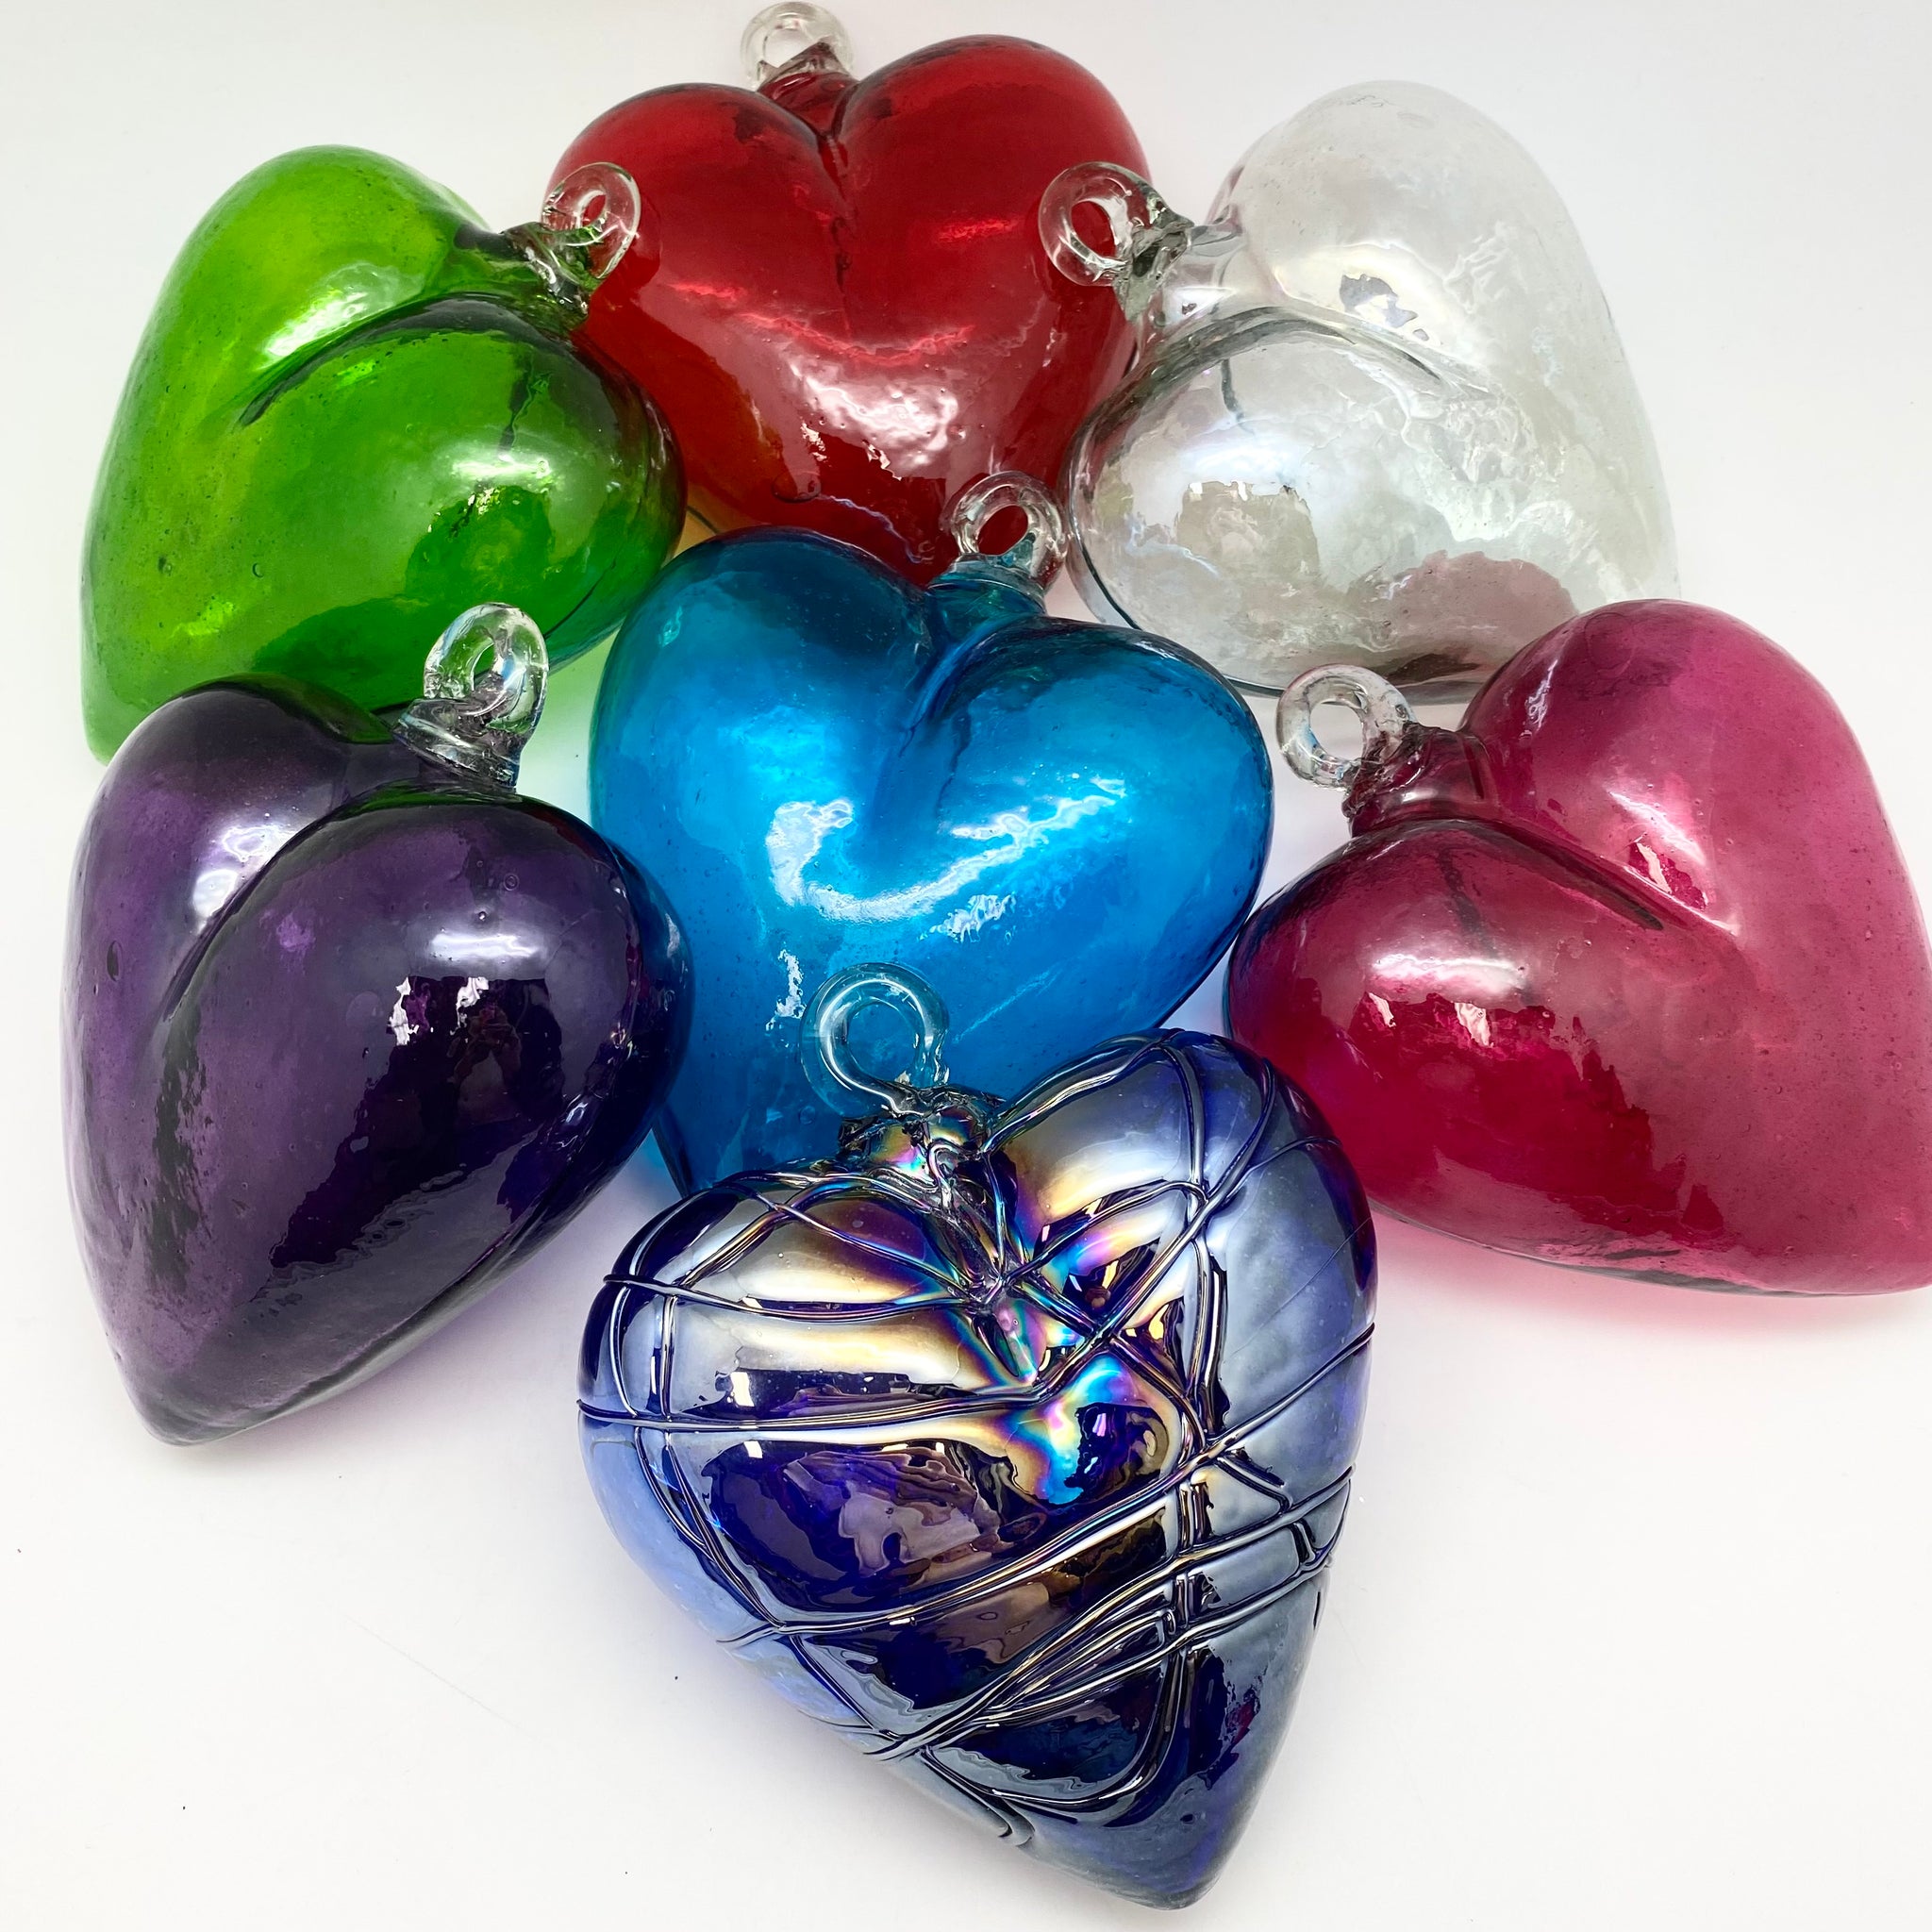 Ornamental Aqua Glass Heart, Small hanging glass hearts - Zenwaro